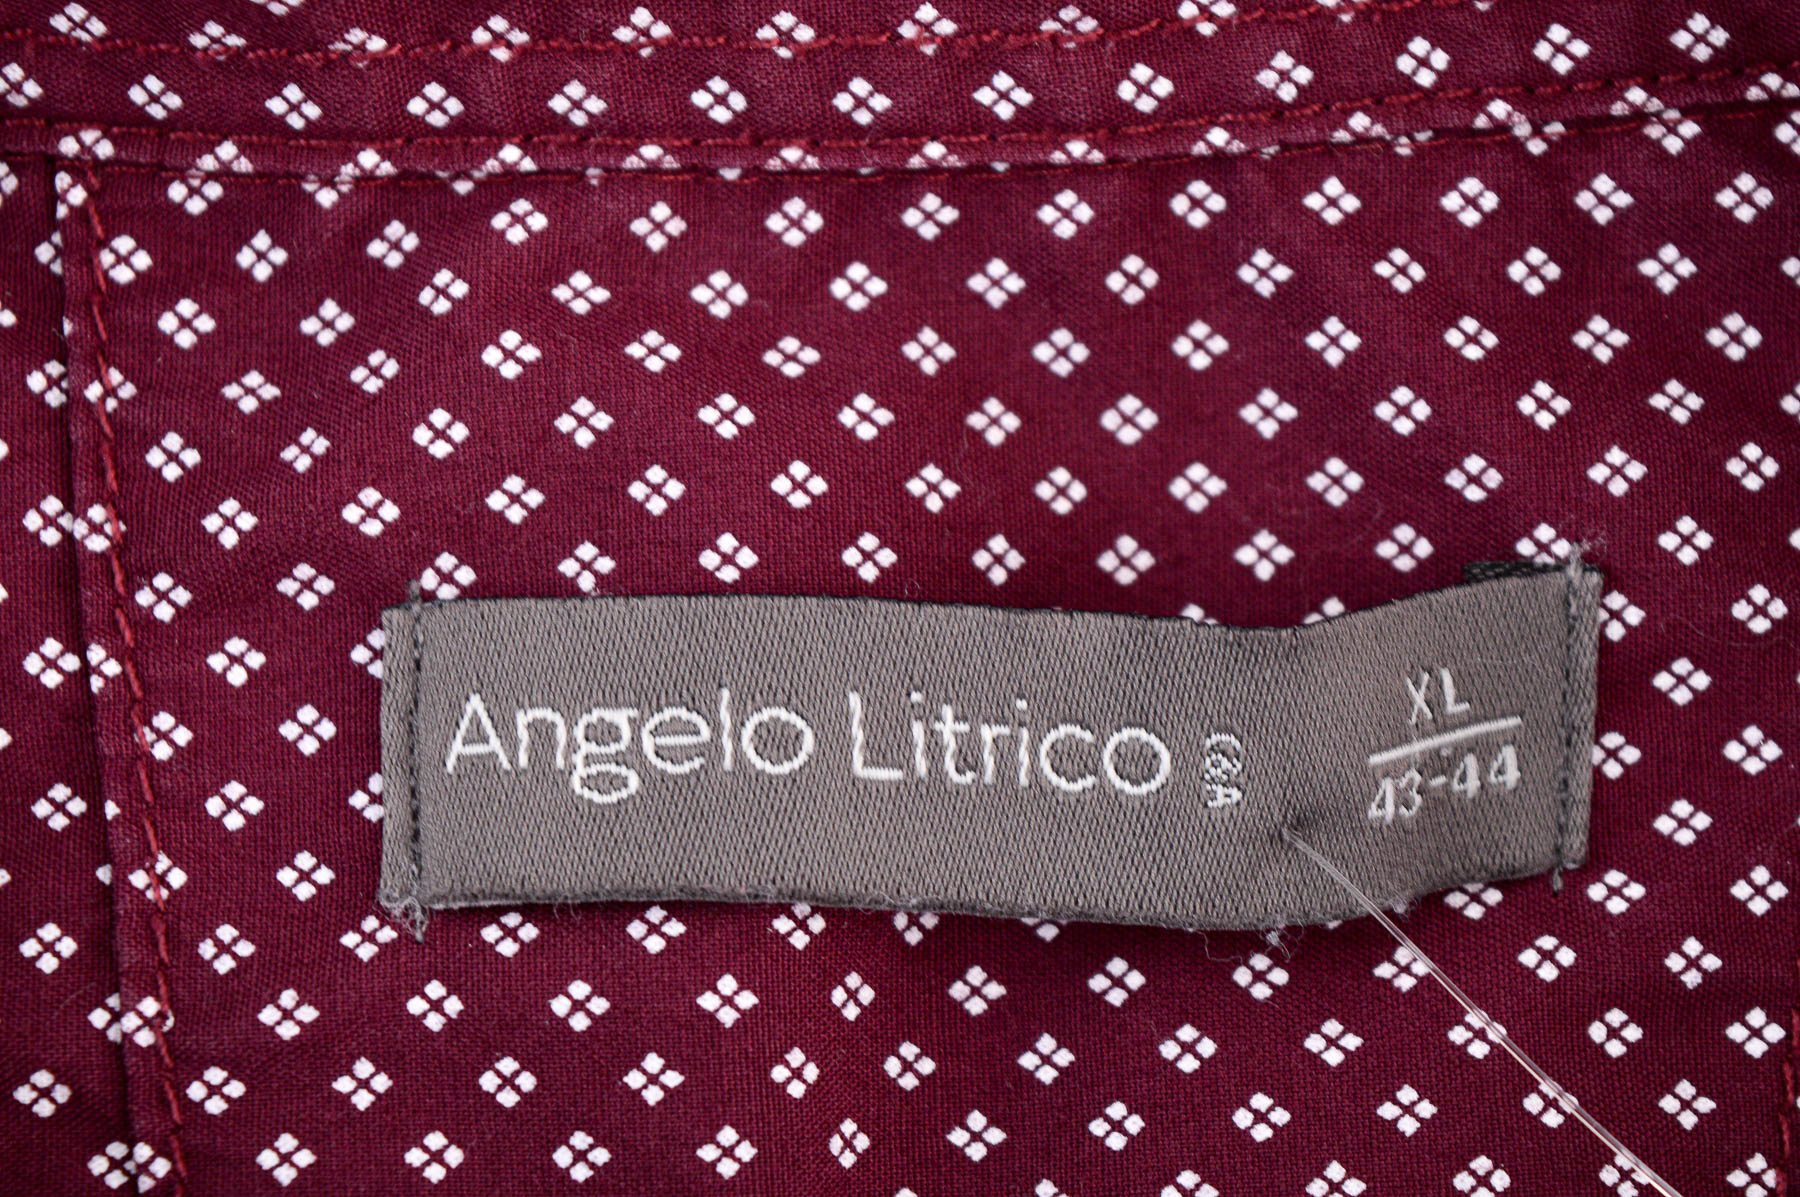 Męska koszula - Angelo Litrico - 2